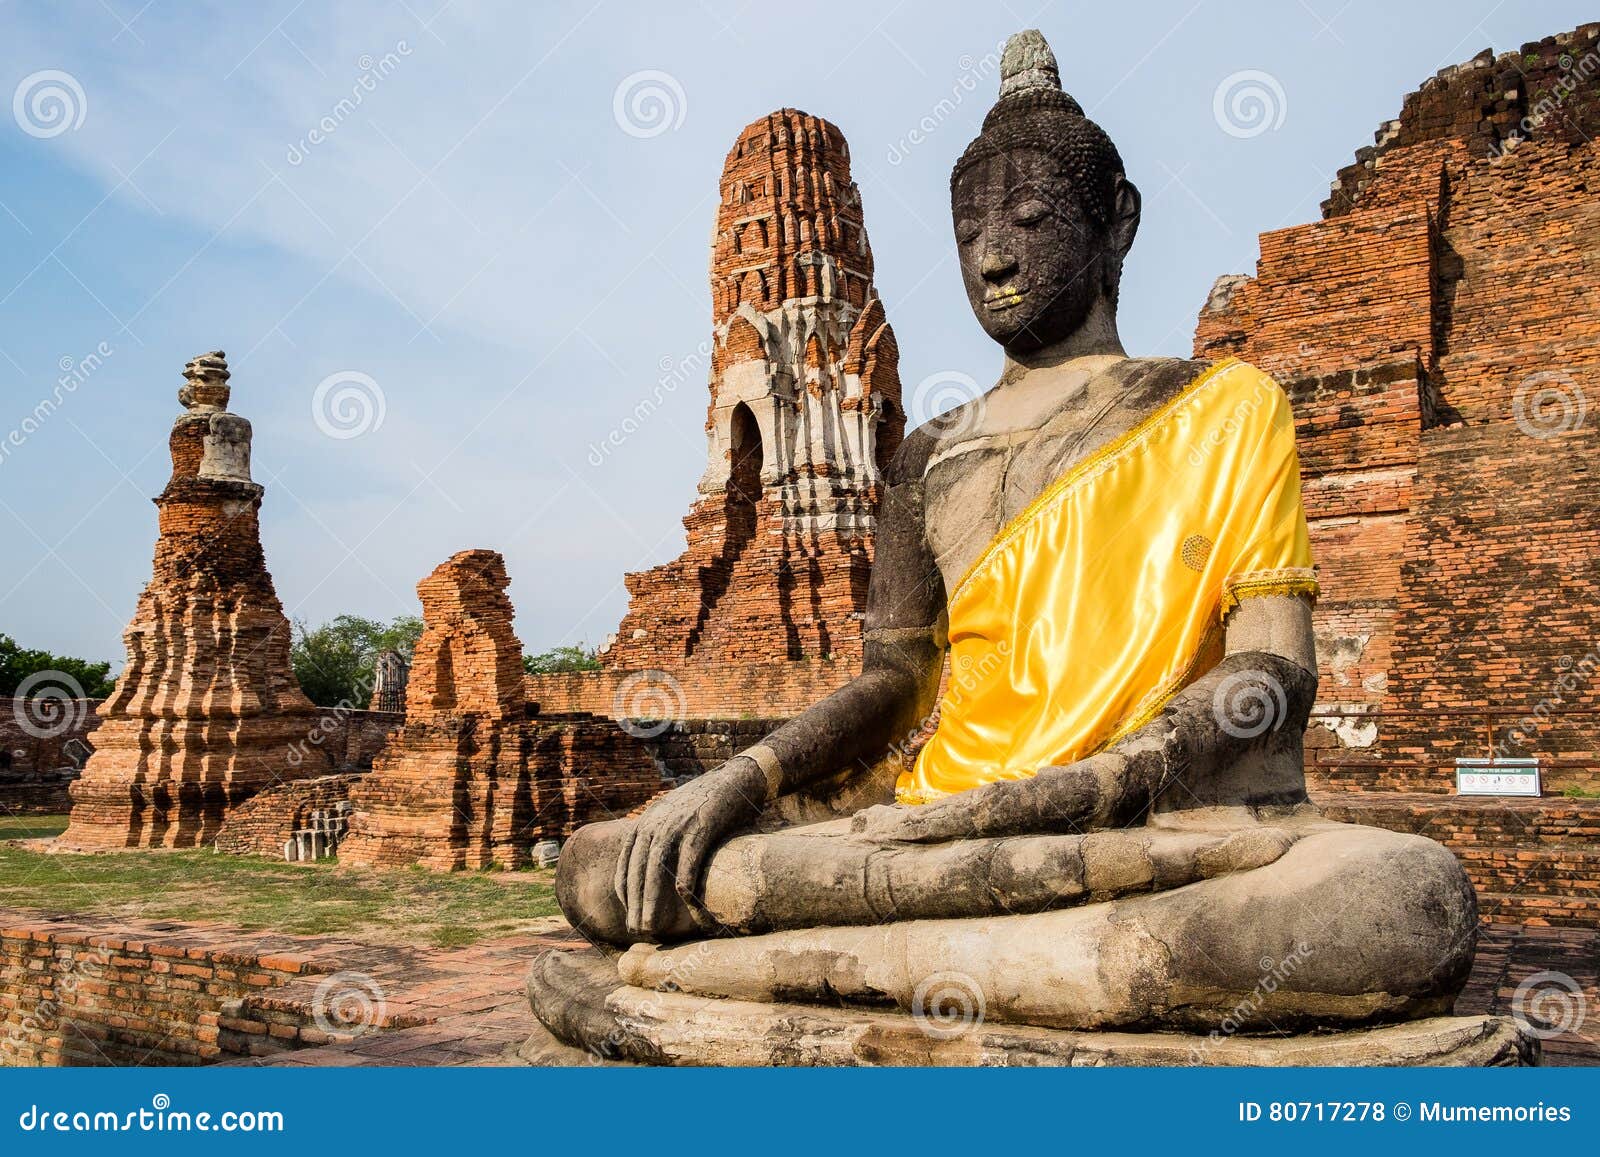 temple buddha statue pagoda ancient ruins invaluable